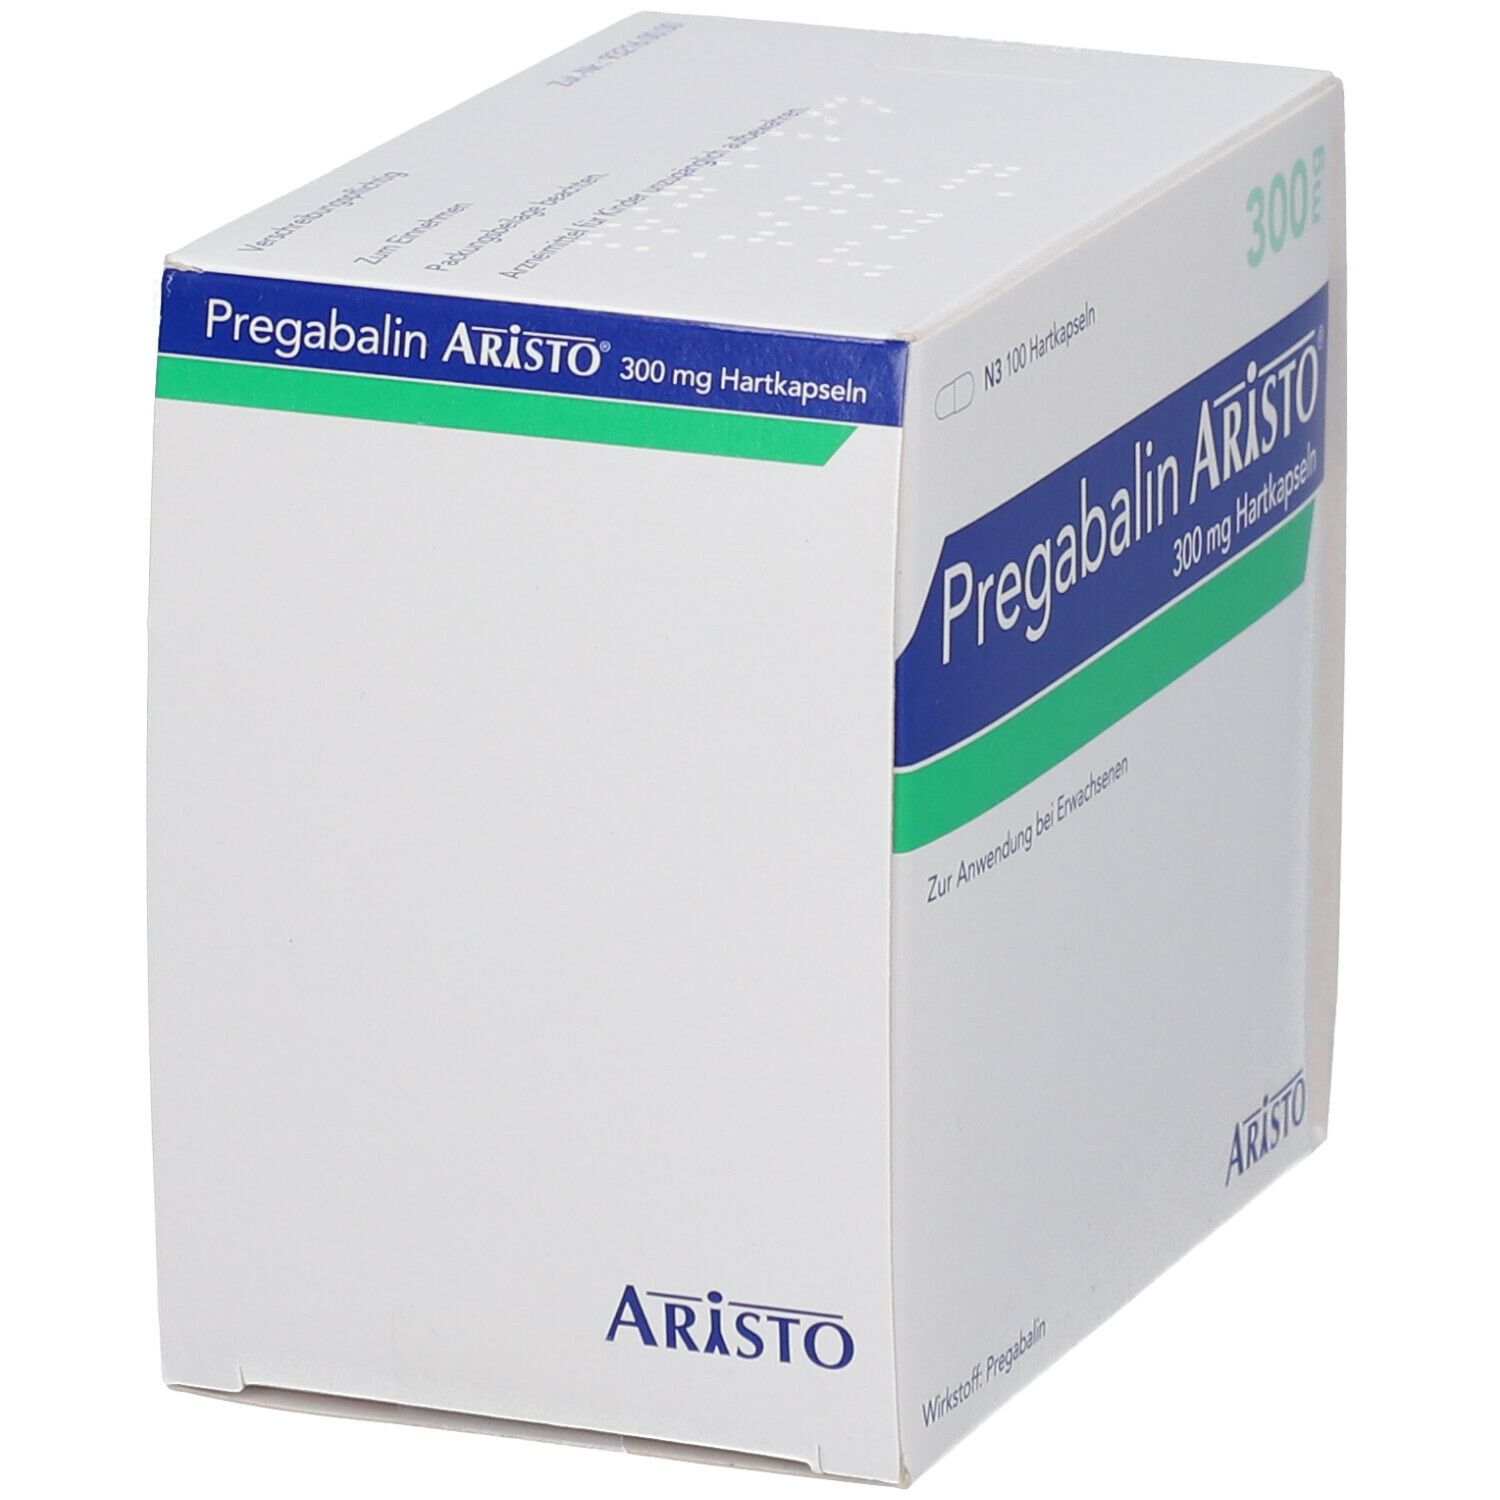 Pregabalin Aristo® 300 mg